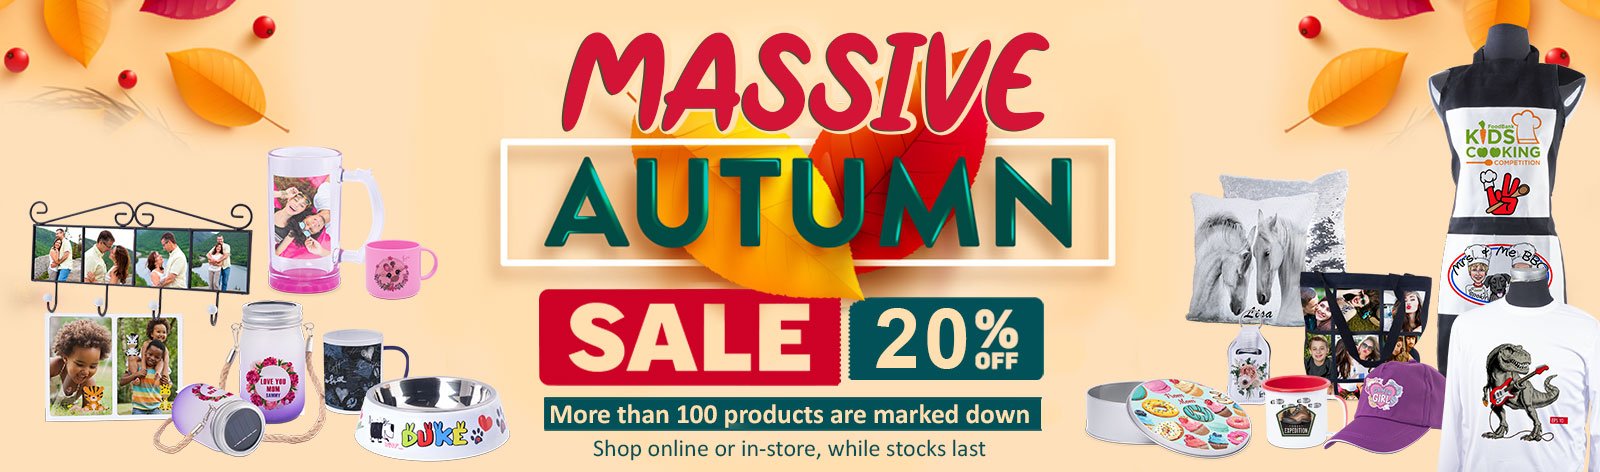 Massive Autumn Sale